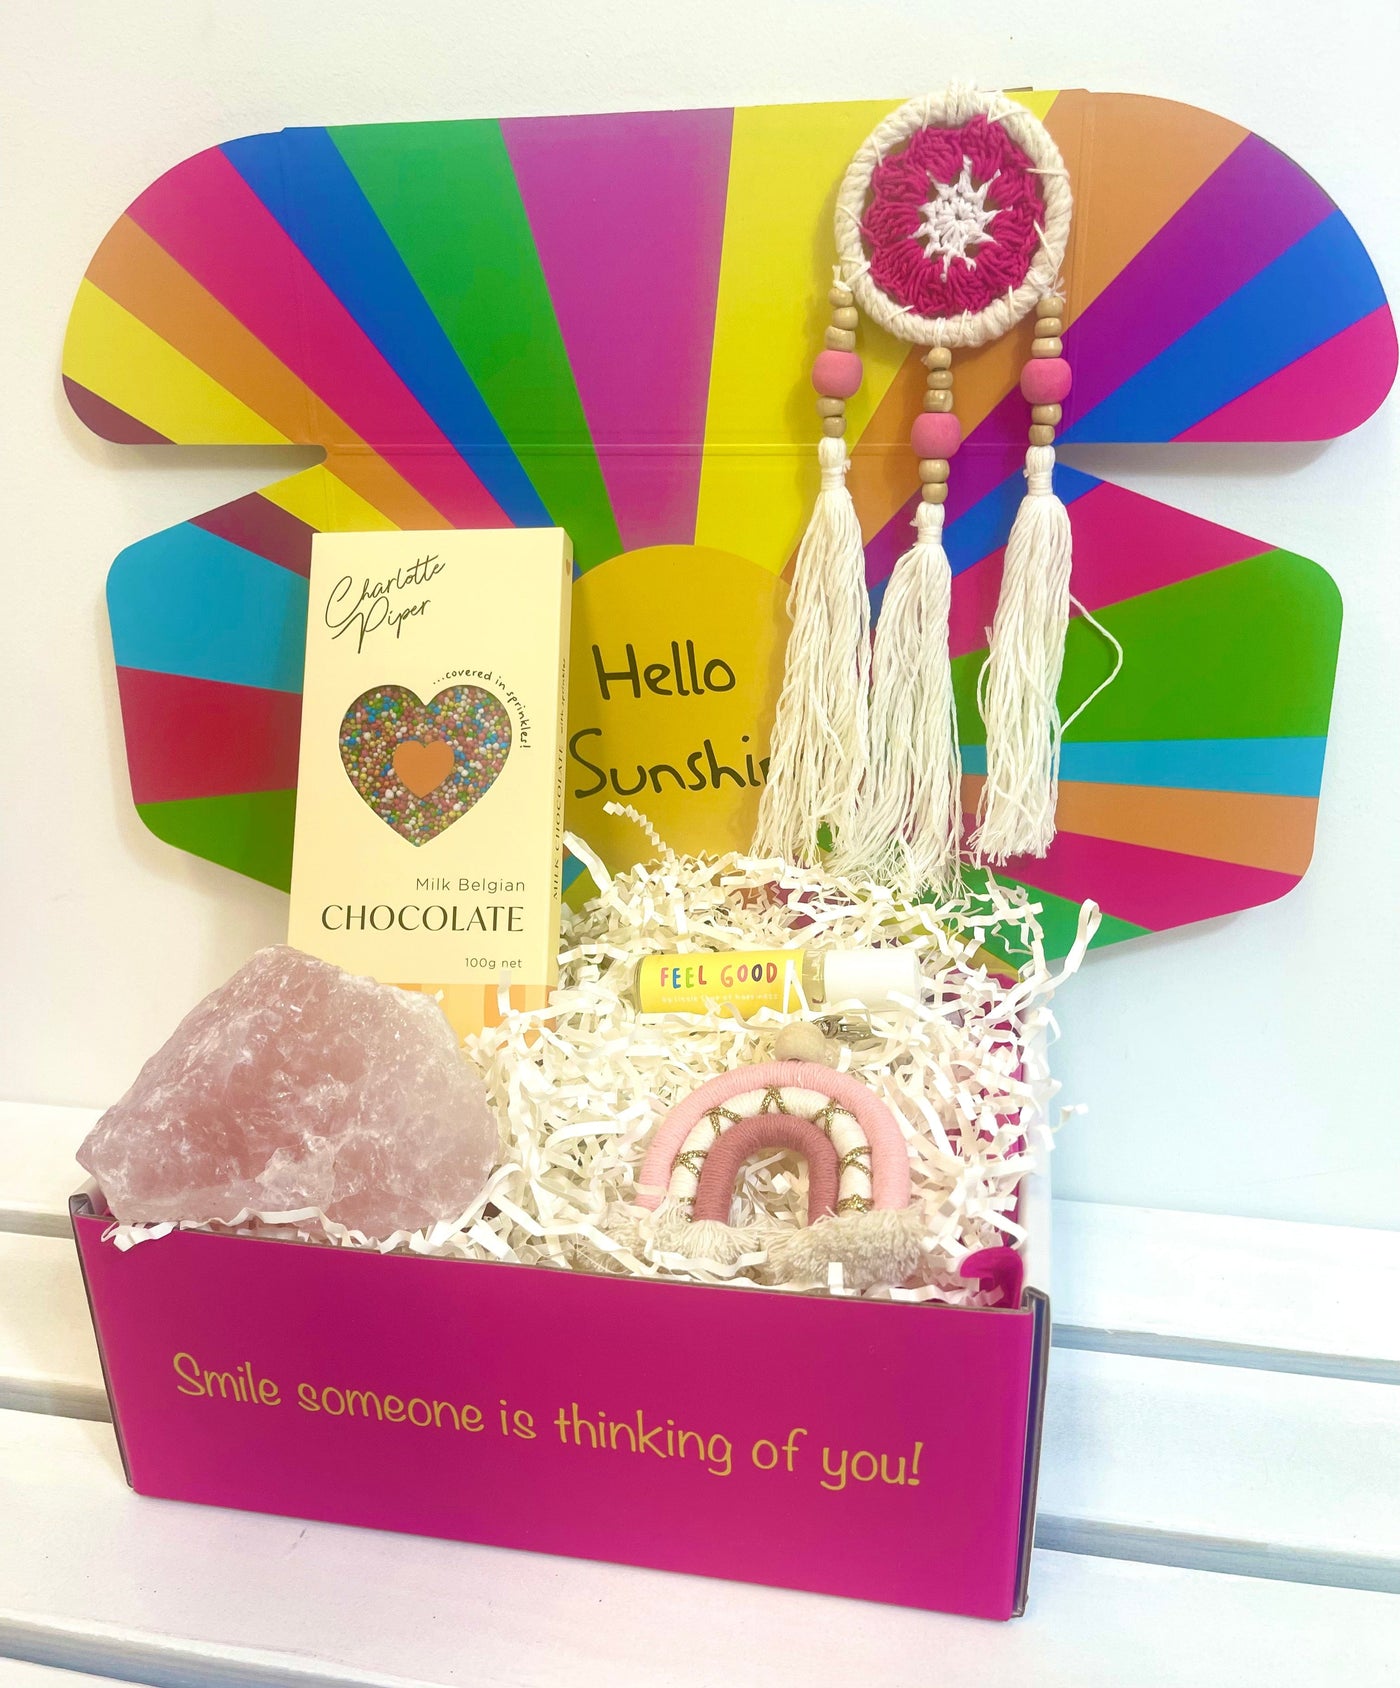 Rose Quartz Gift Box